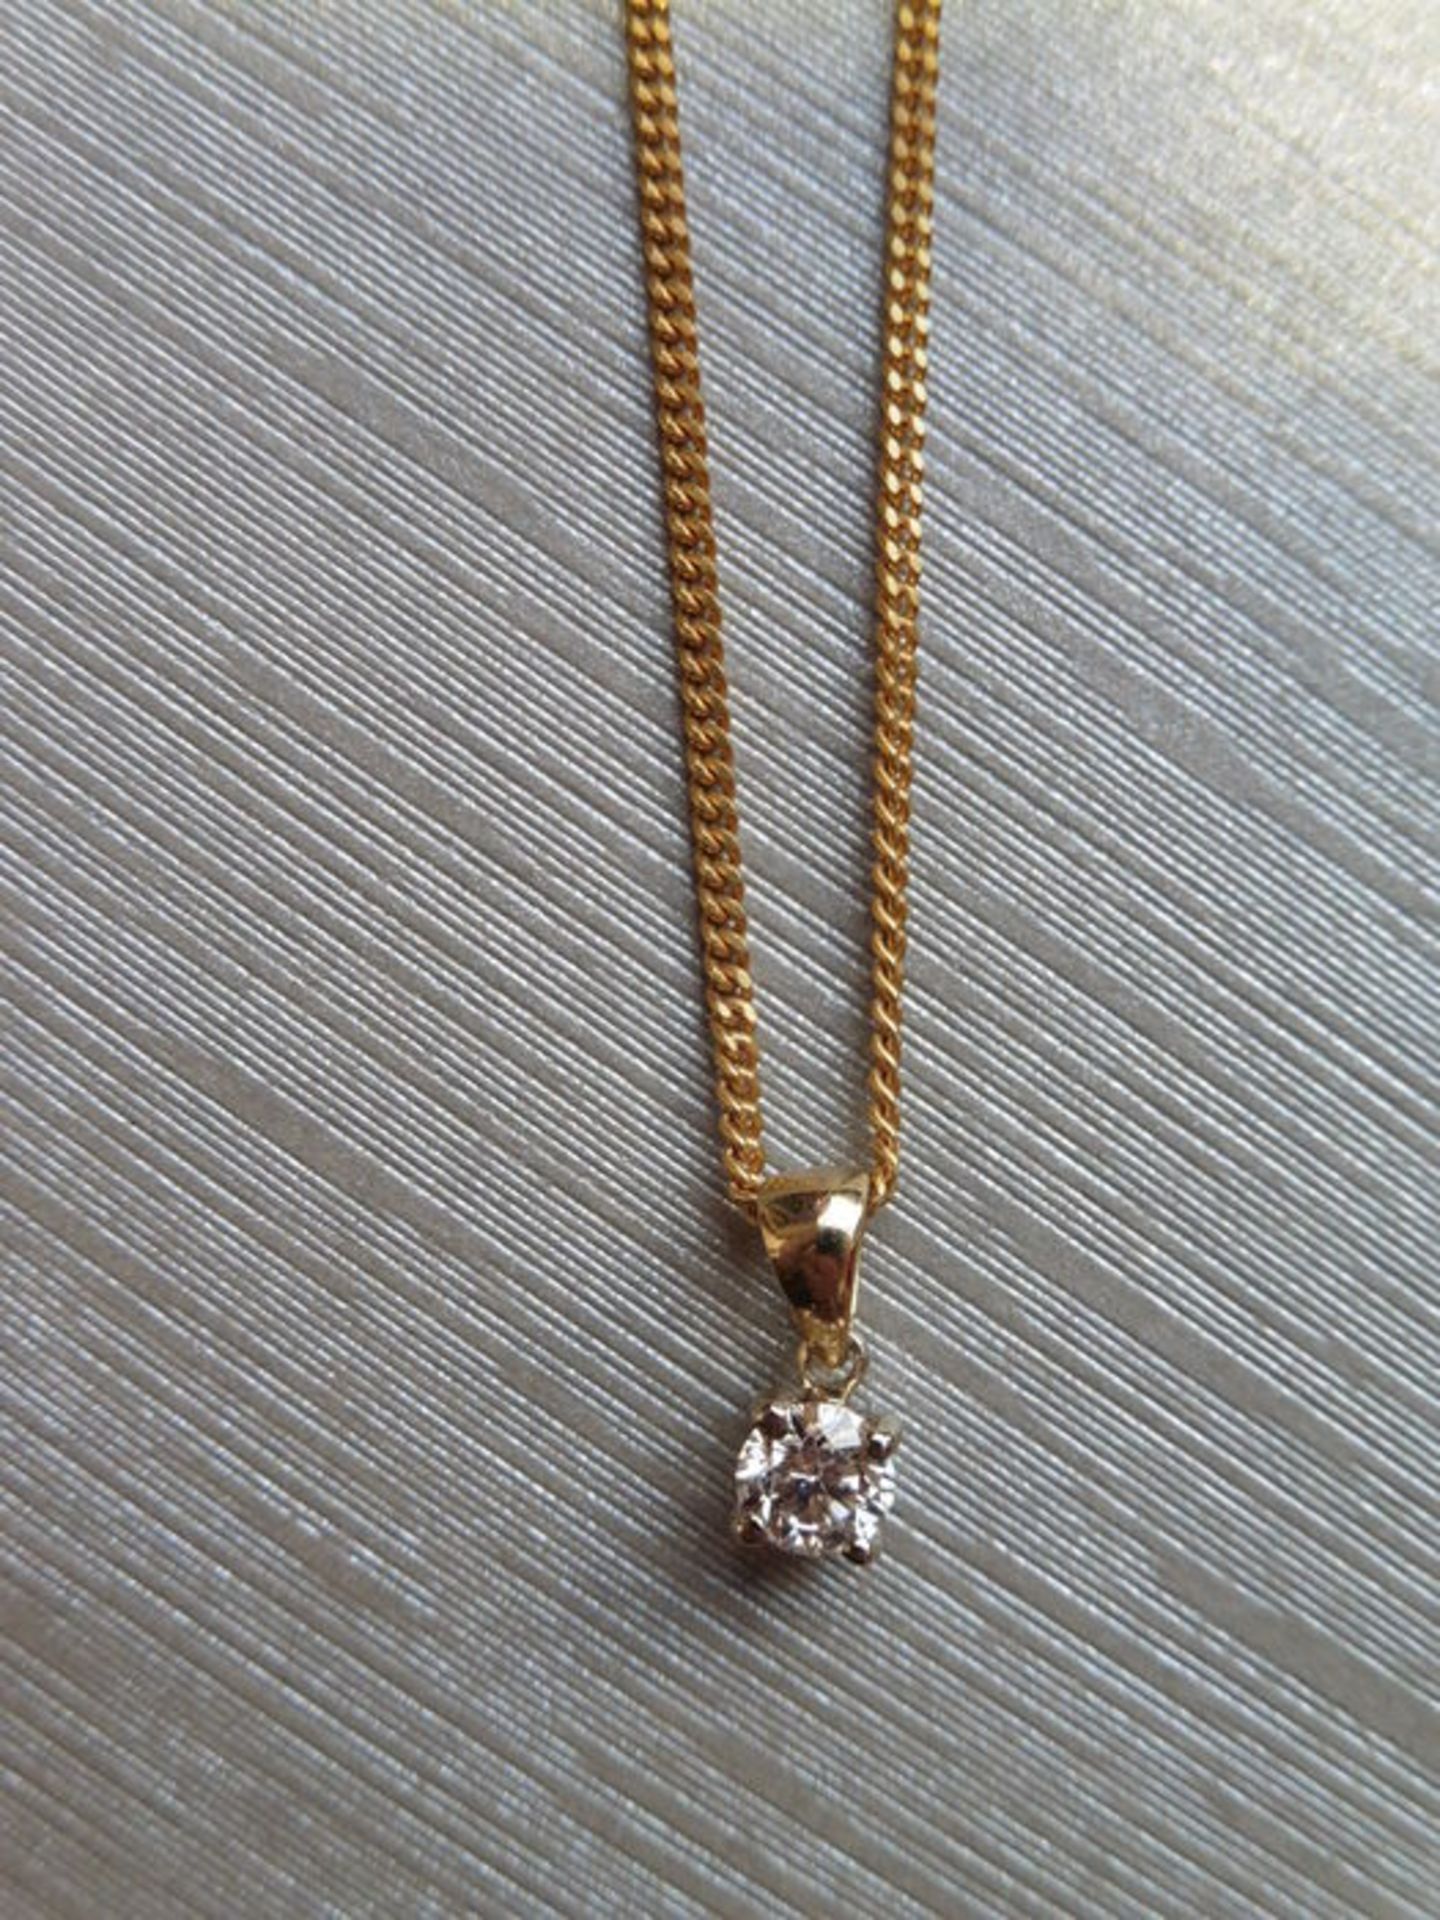 0.15ct diamond solitaire pendant set in 18ct gold. Brilliant cut diamond